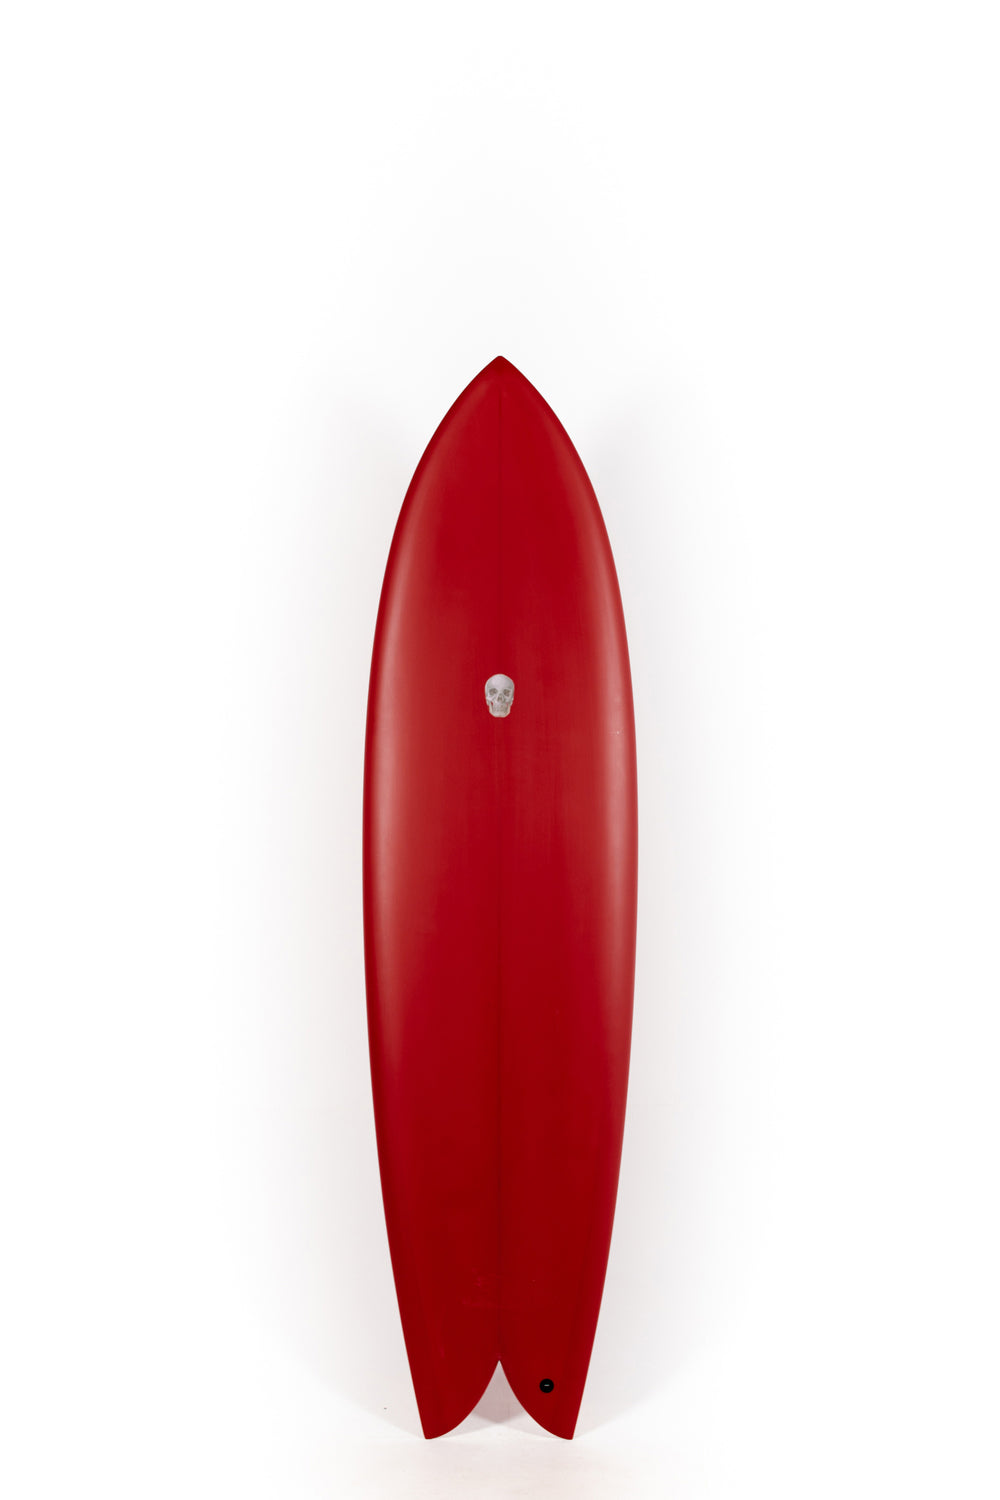 Pukas Surf shop - Christenson Surfboards - LONG PHISH - 7'0